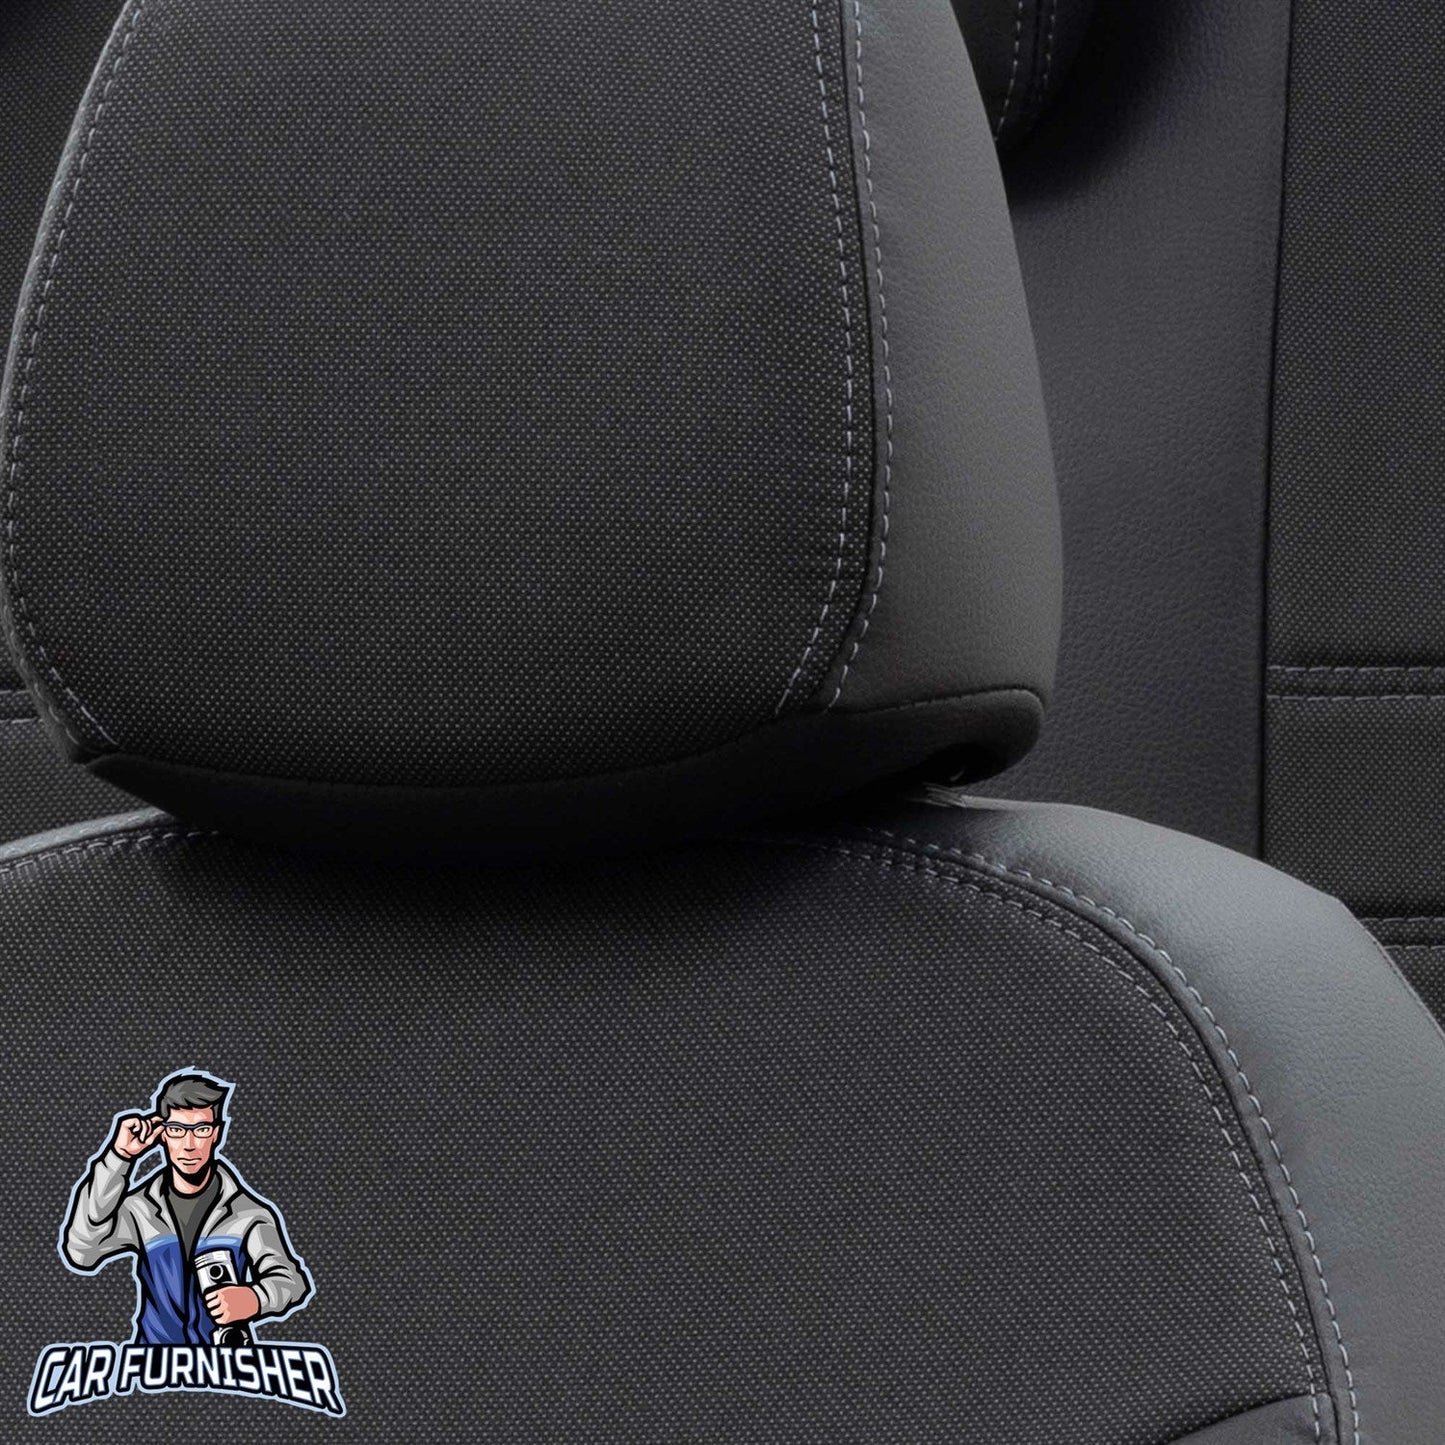 Iveco Daily Seat Covers Paris Leather & Jacquard Design Black Leather & Jacquard Fabric